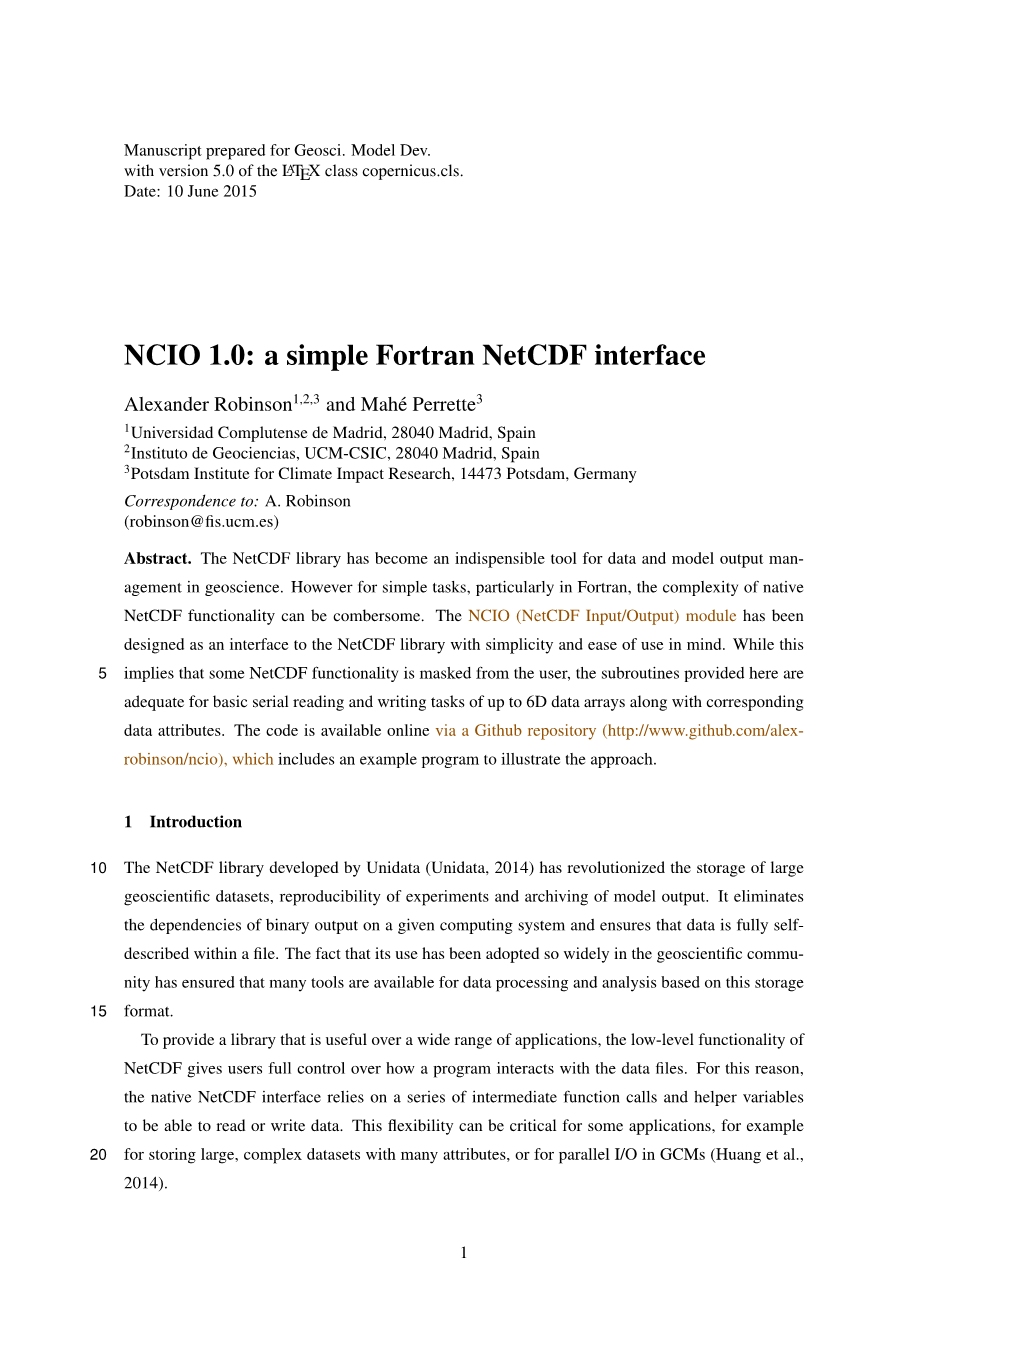 NCIO 1.0: a Simple Fortran Netcdf Interface